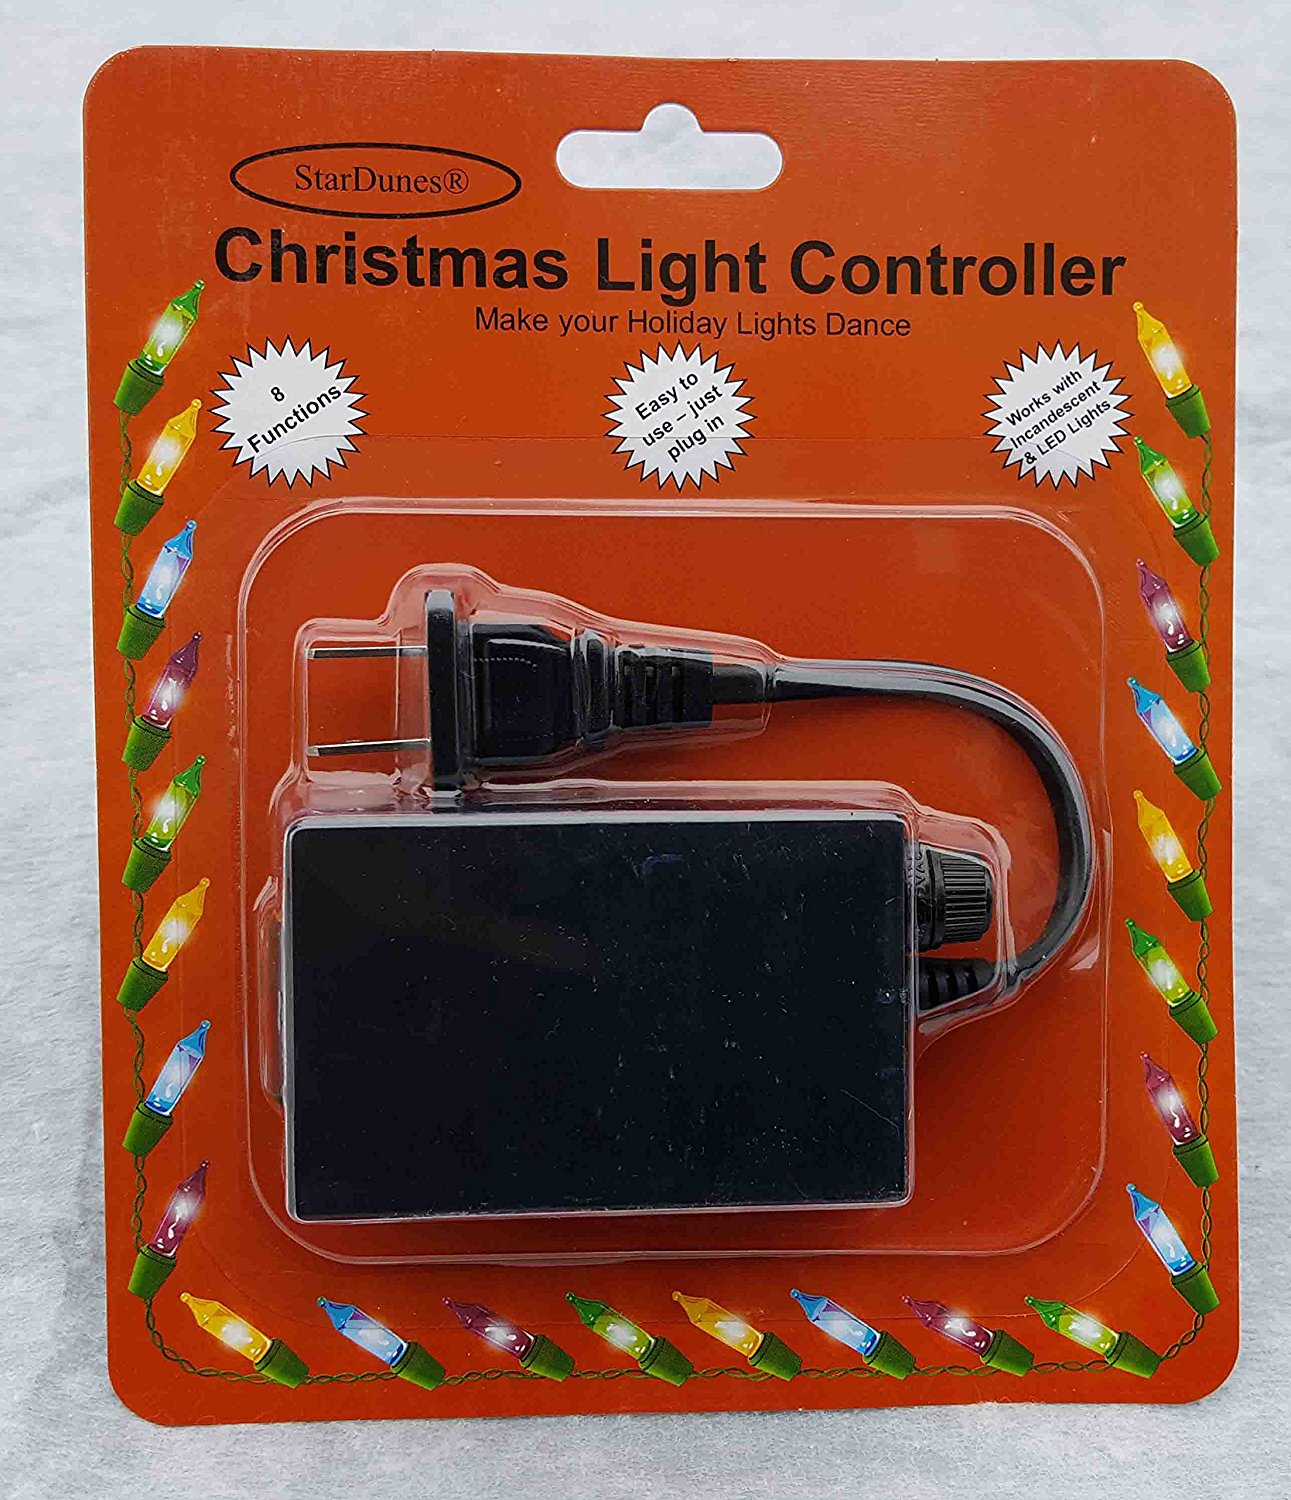 Amazon.com: StarDunes Christmas Light Controller: Home & Kitchen